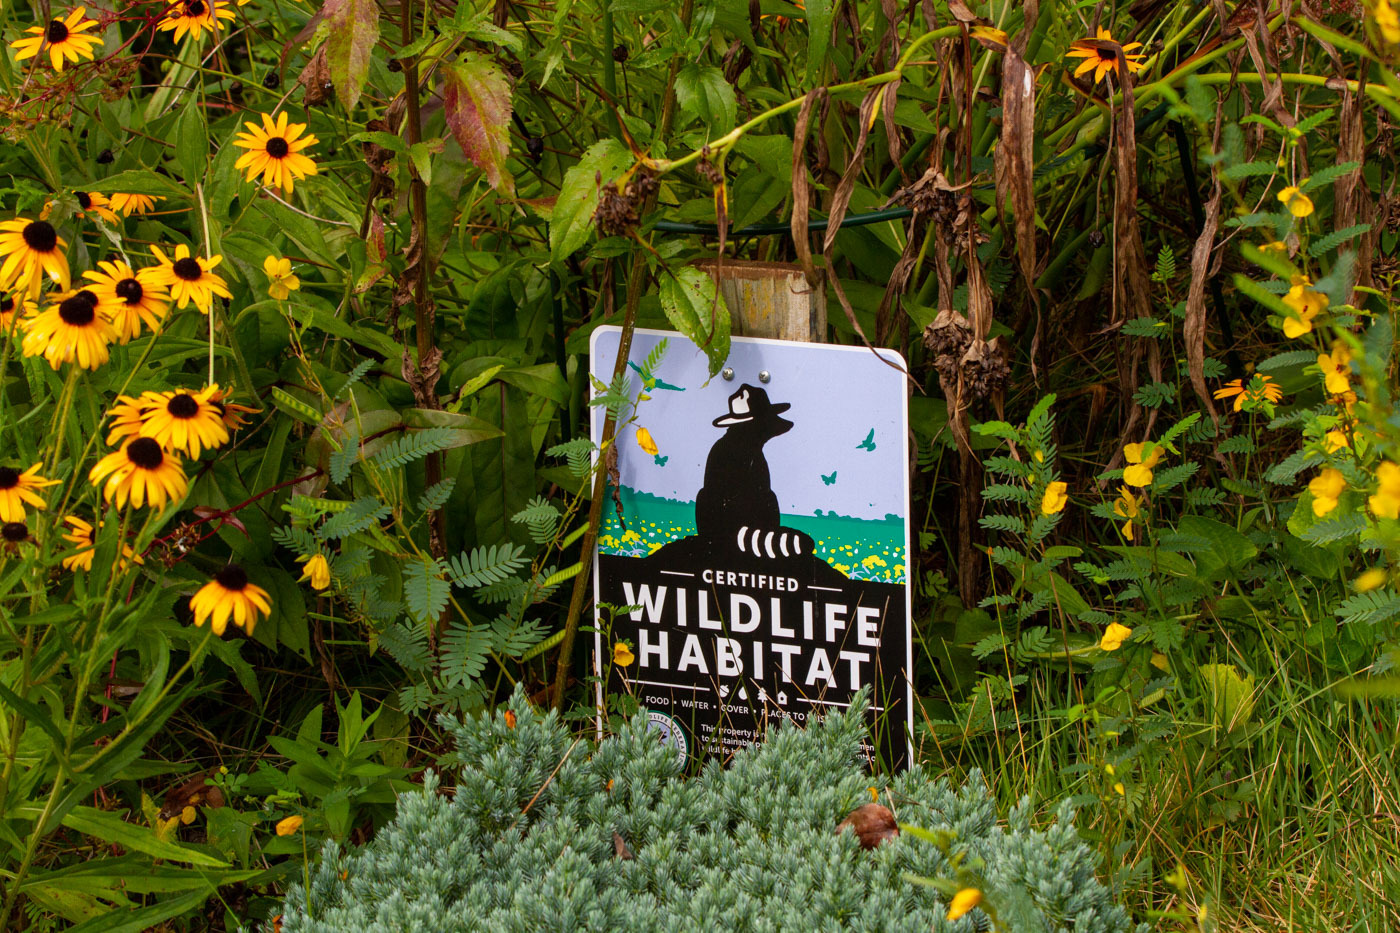 Grovedale Garden Wildlife Habitat sign